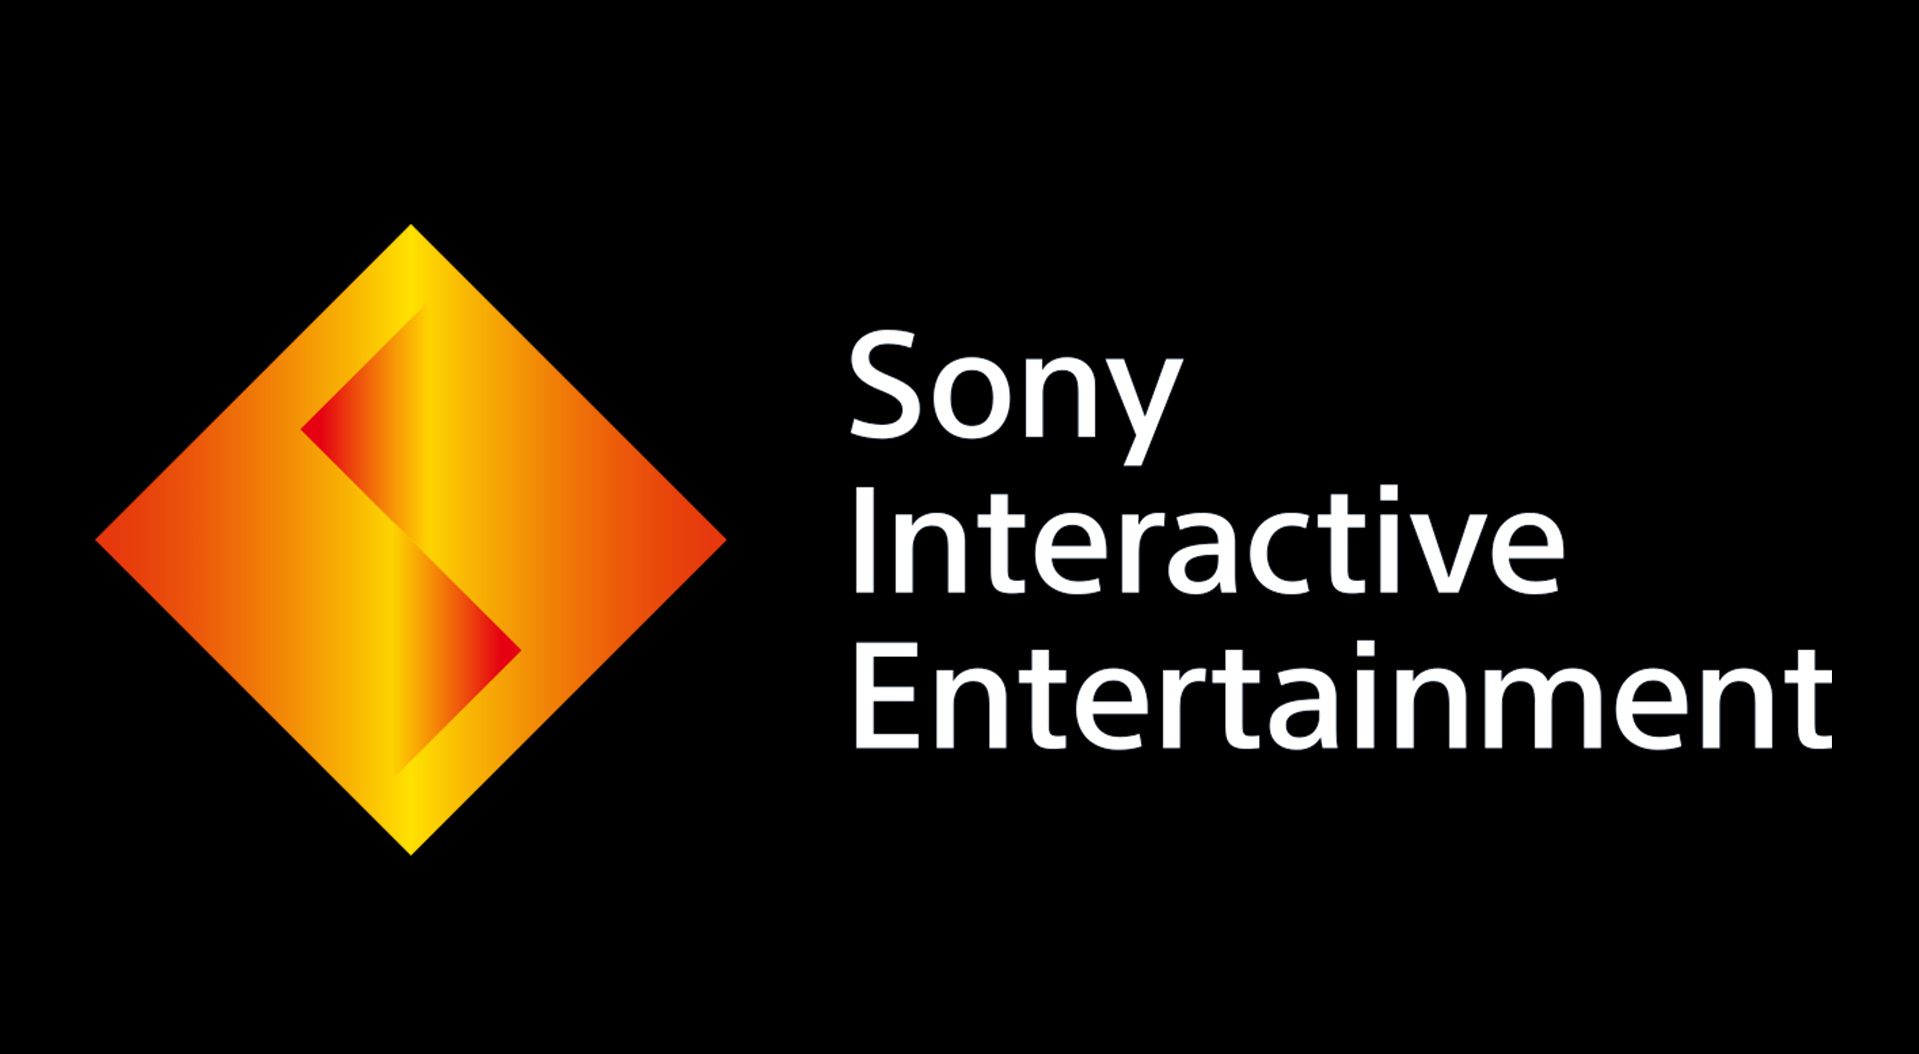 Sony Interactive Entertainment Logo on black